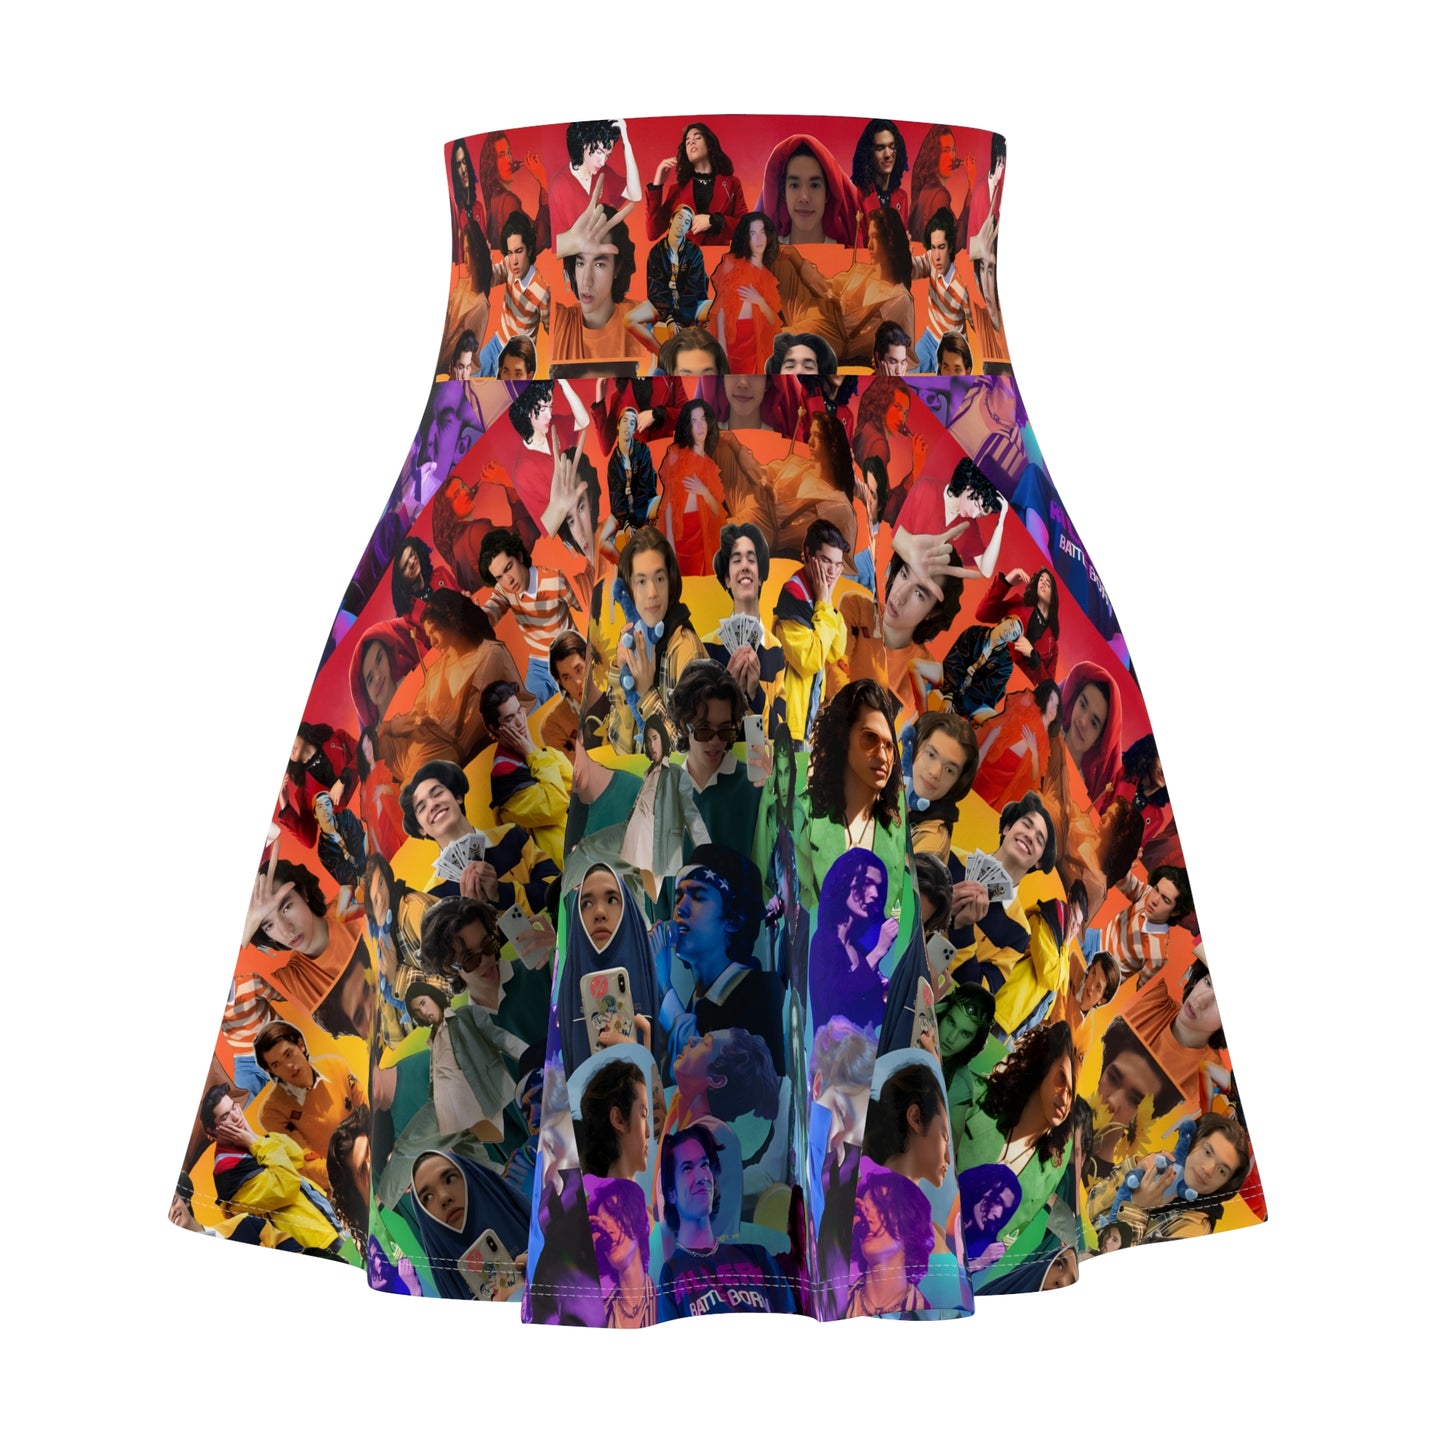 Conan Grey Rainbow Photo Collage Women's Skater Skirt